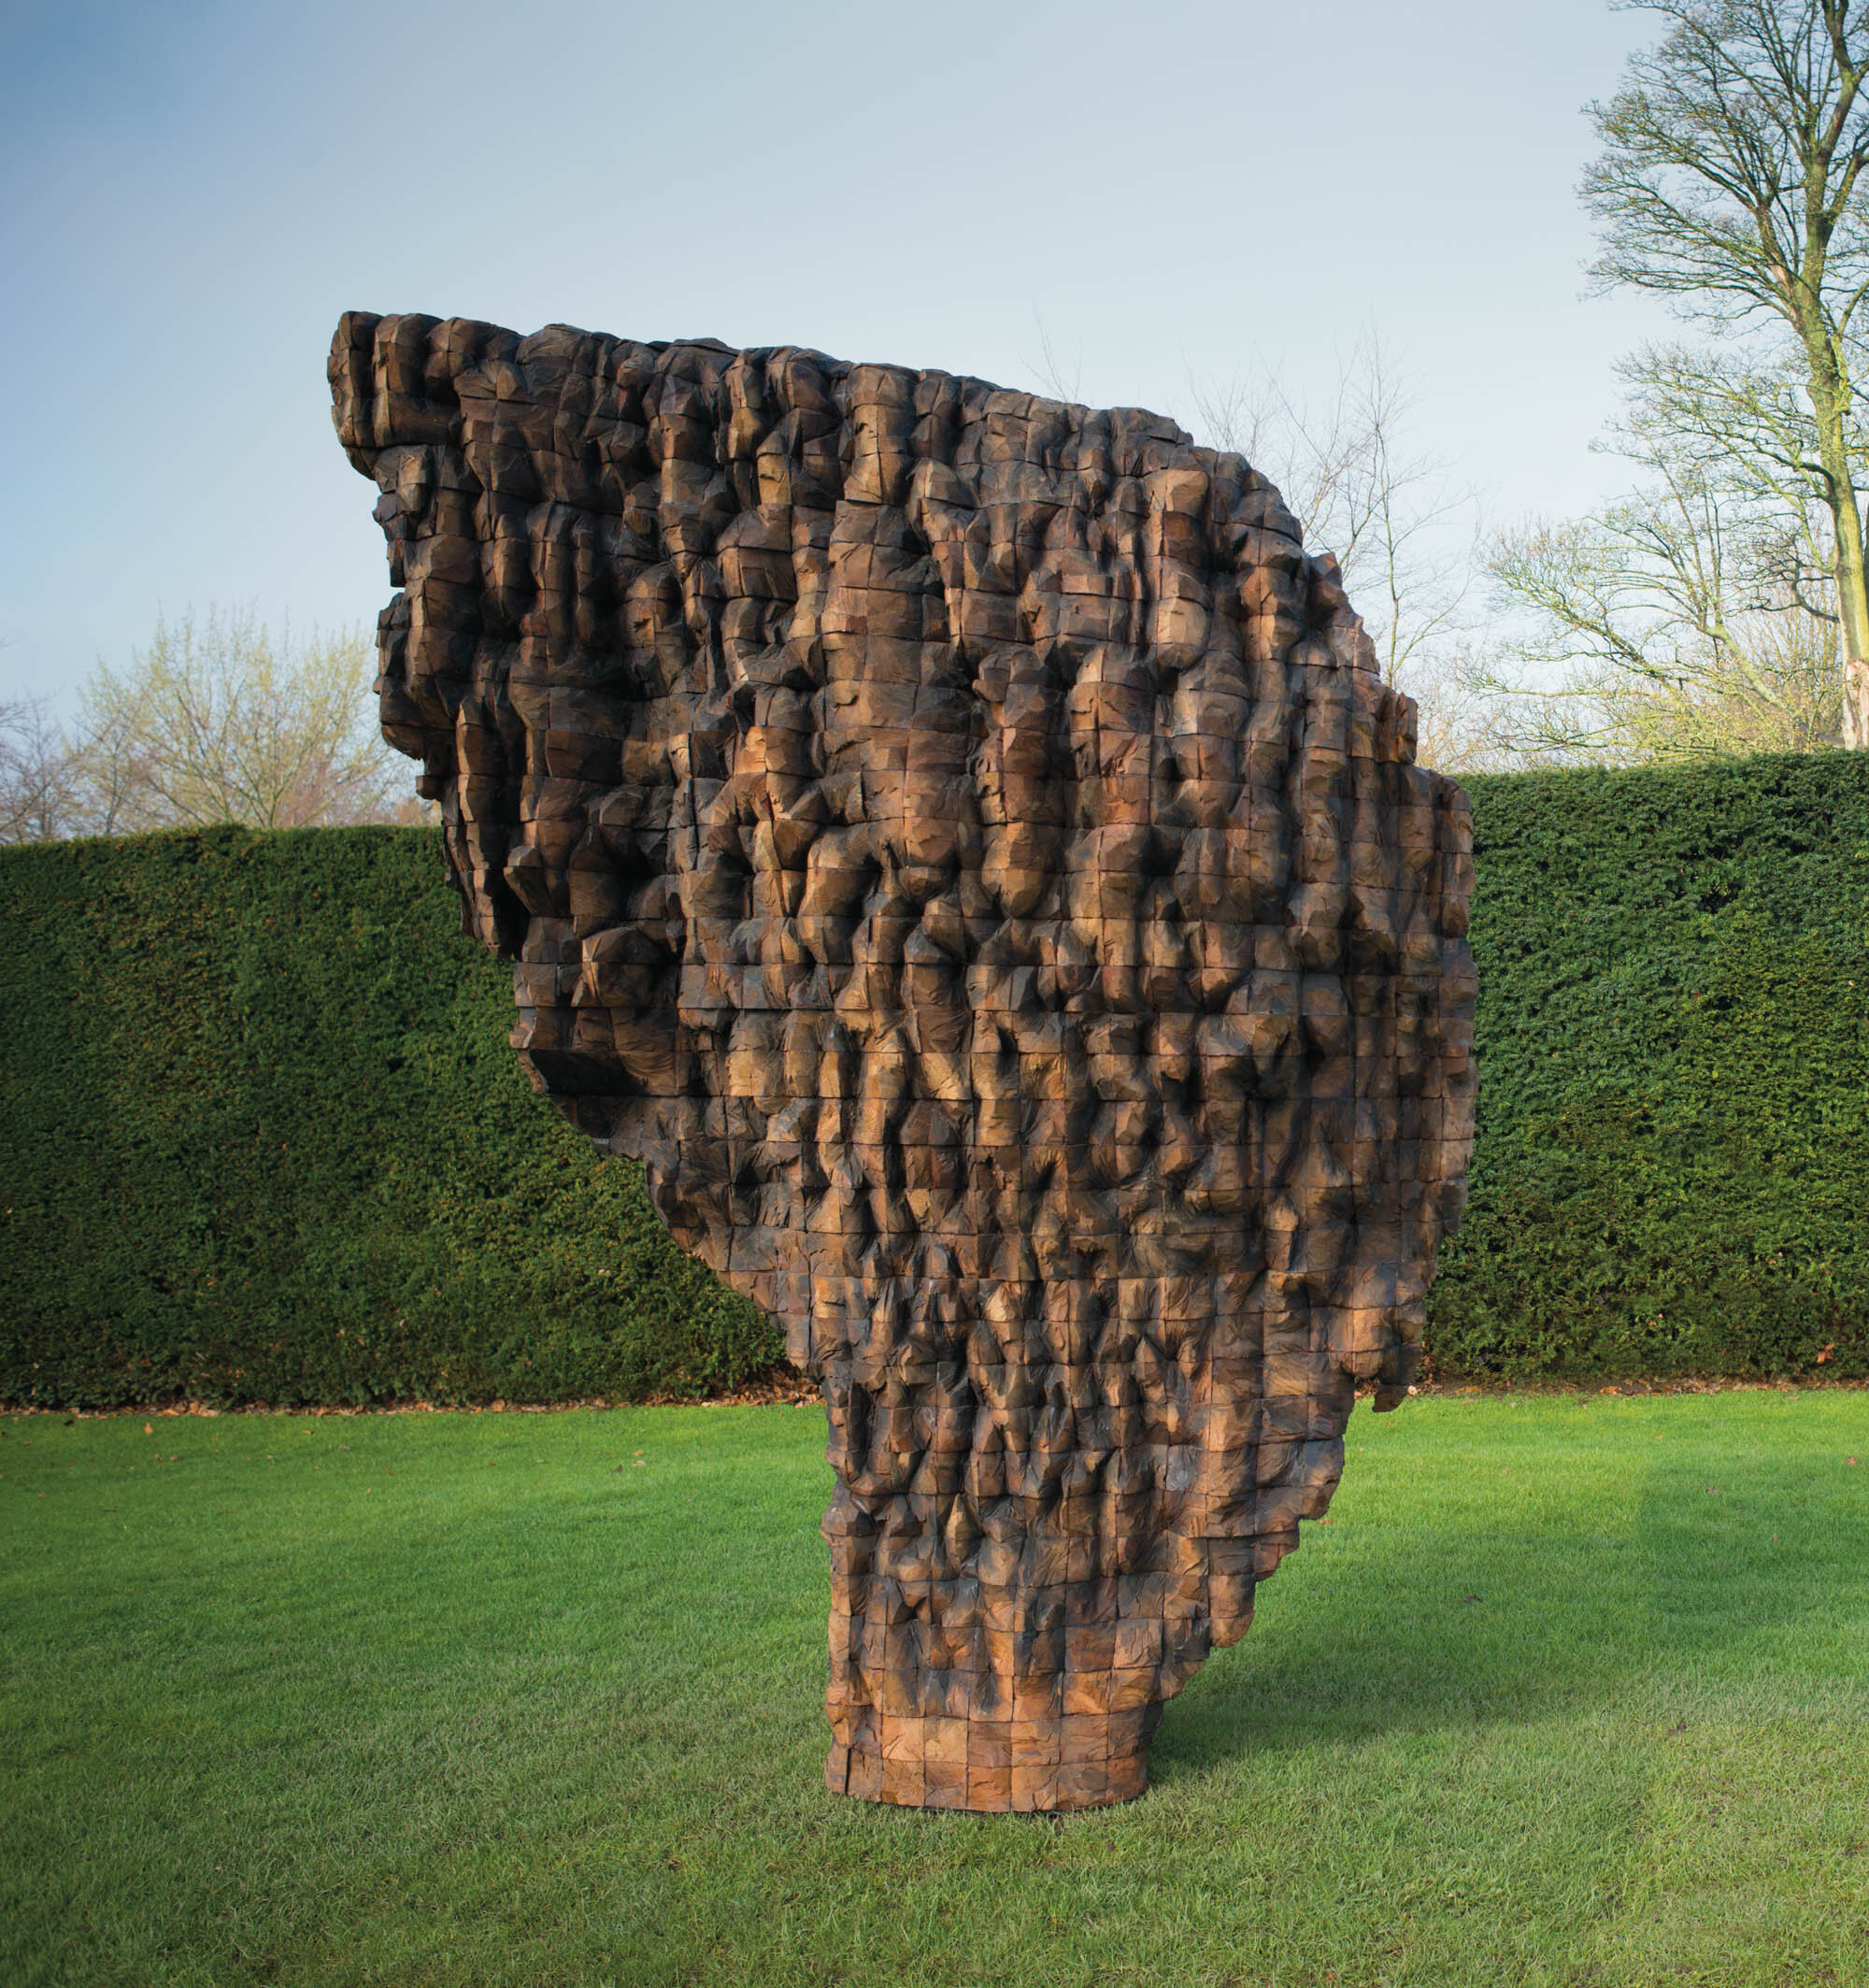       Scratch , 2013-14 Cedar and graphite 114 x 87 x 64 in.    MORE IMAGES   Yorkshire Sculpture Park   Venice Biennale  